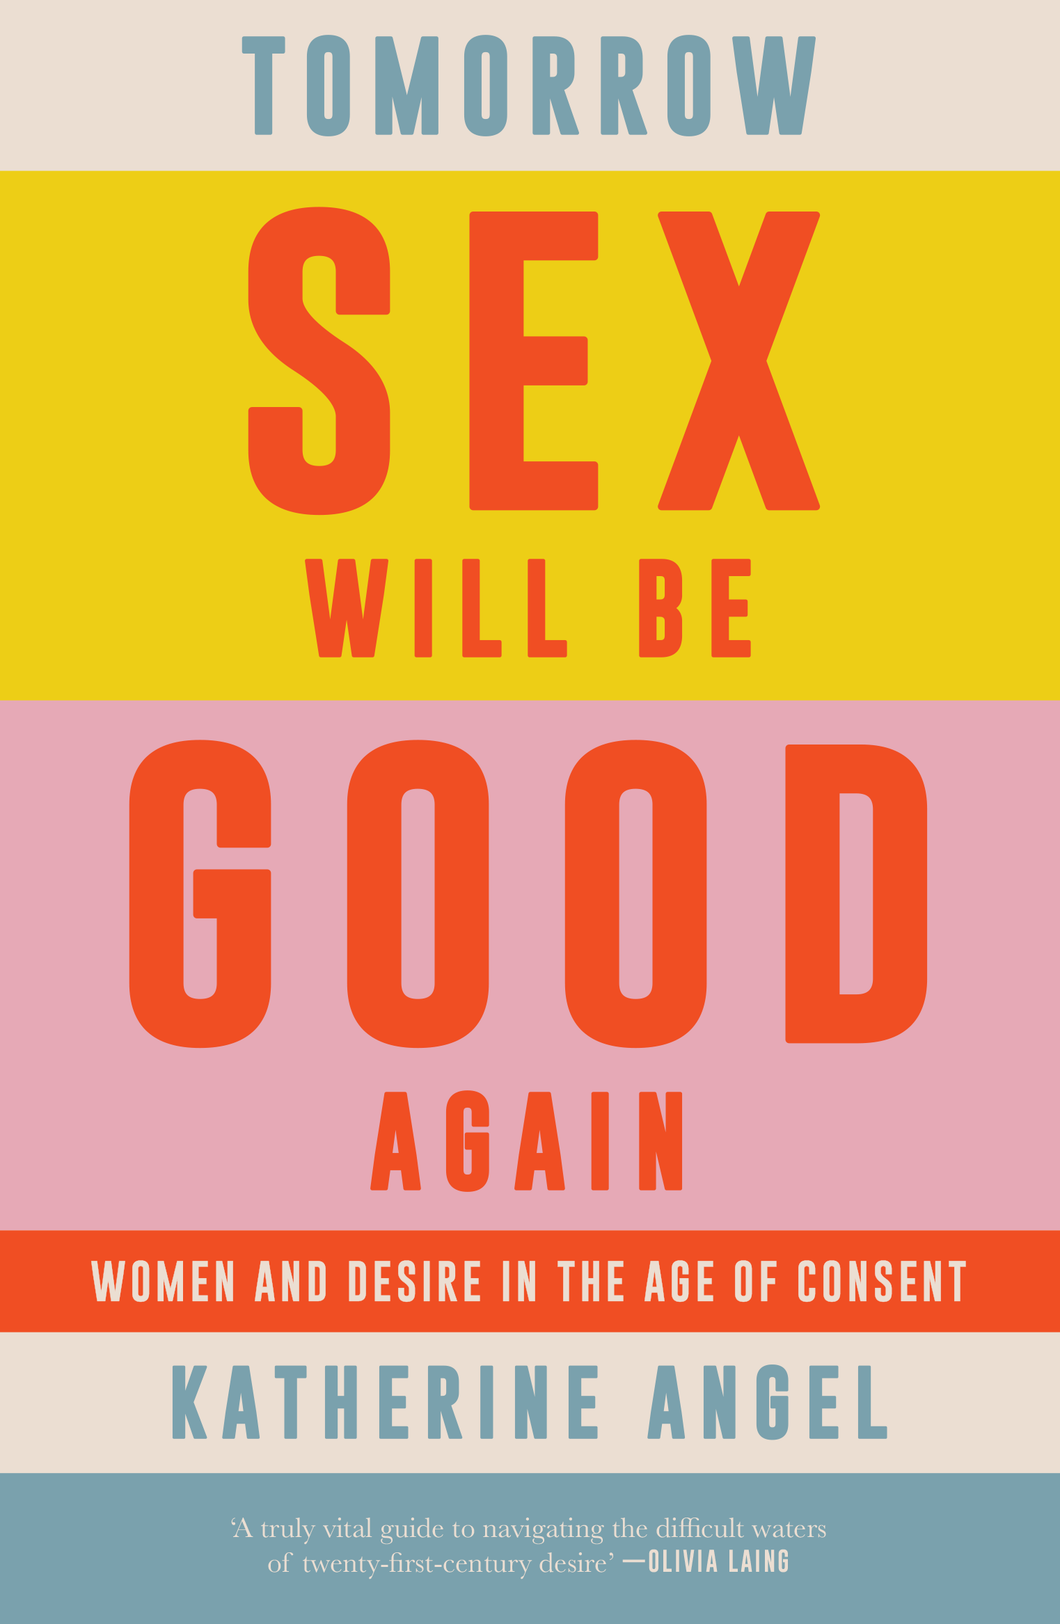 Tomorrow Sex Will Be Good Again : Women and Desire in the Age of Consent ร้านหนังสือและสิ่งของ เป็นร้านหนังสือภาษาอังกฤษหายาก และร้านกาแฟ หรือ บุ๊คคาเฟ่ ตั้งอยู่สุขุมวิท กรุงเทพ